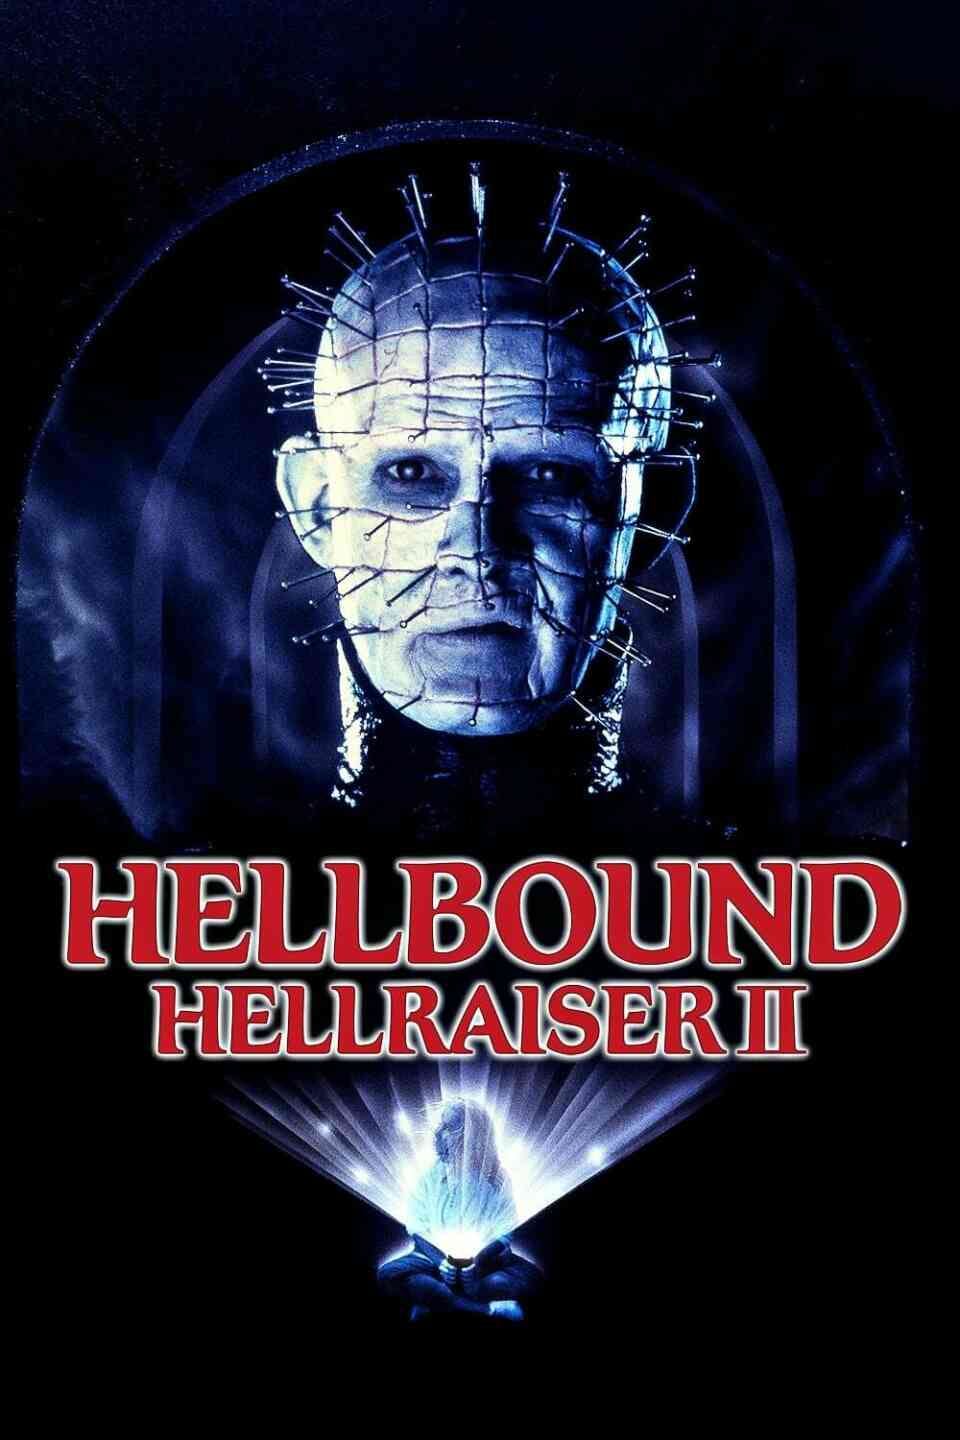 Read Hellraiser II screenplay (poster)